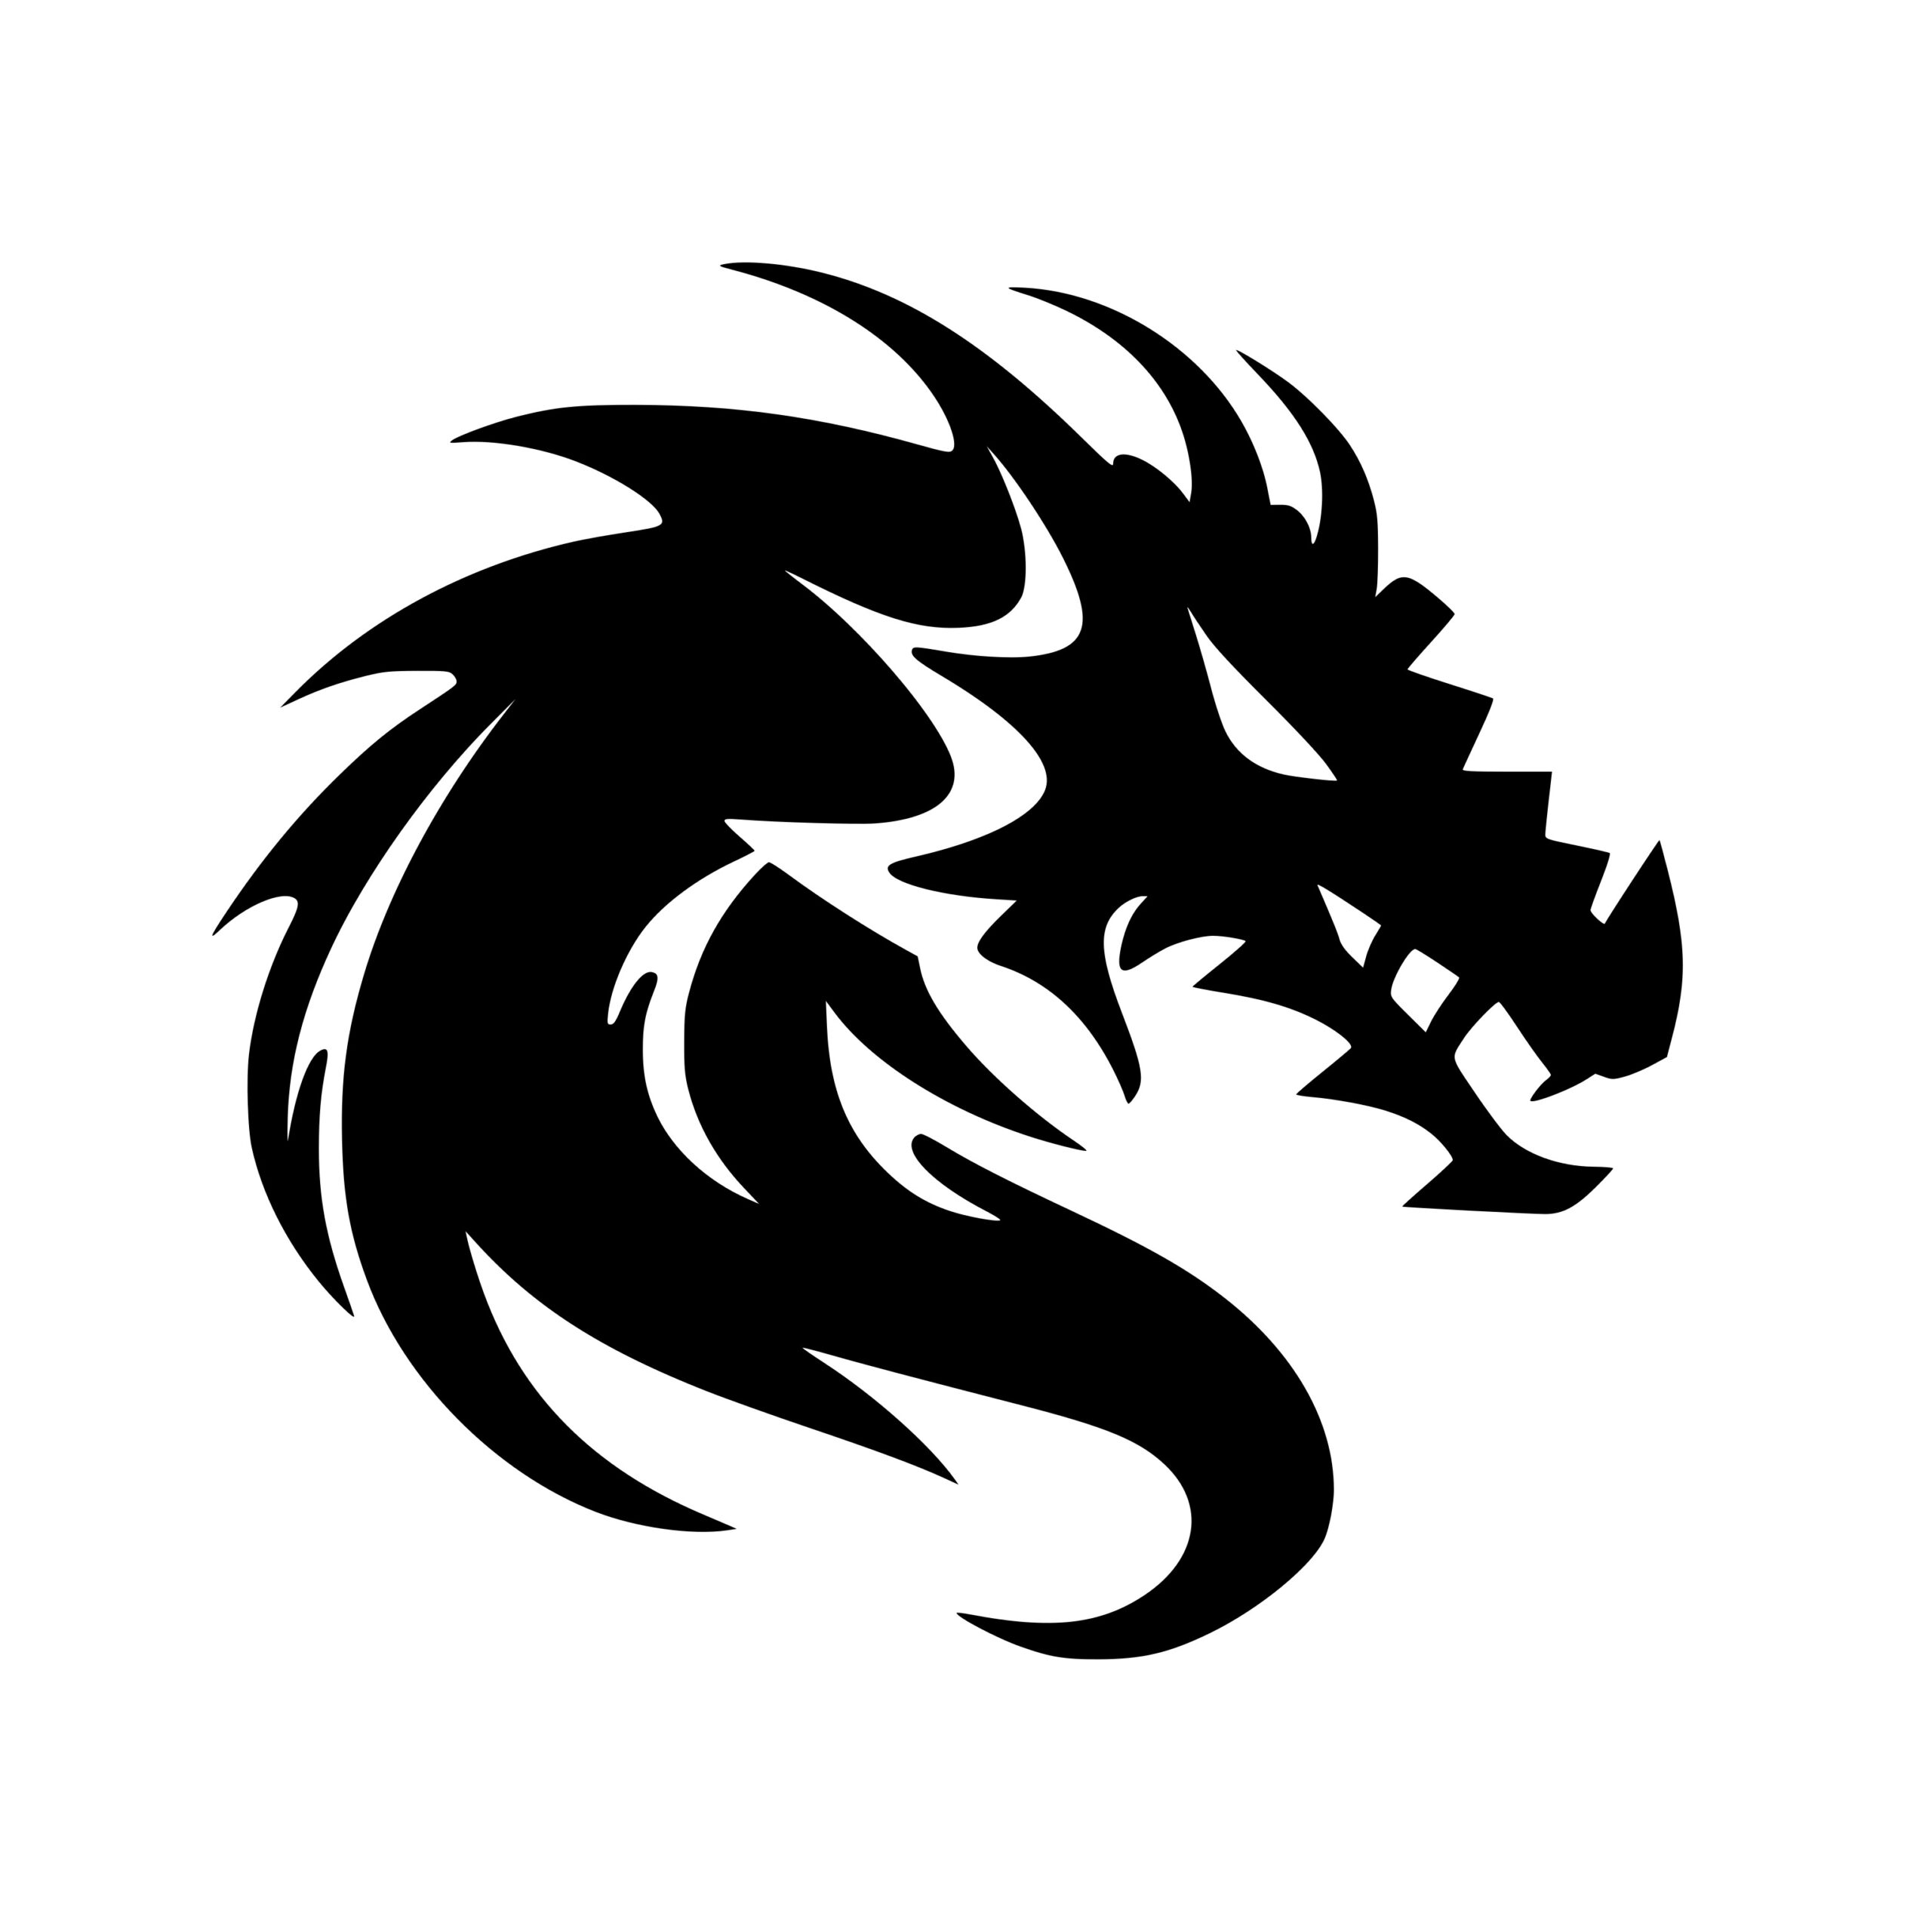 Legendary Dragon SVG: Instant Download for Cricut, Silhouette, Laser